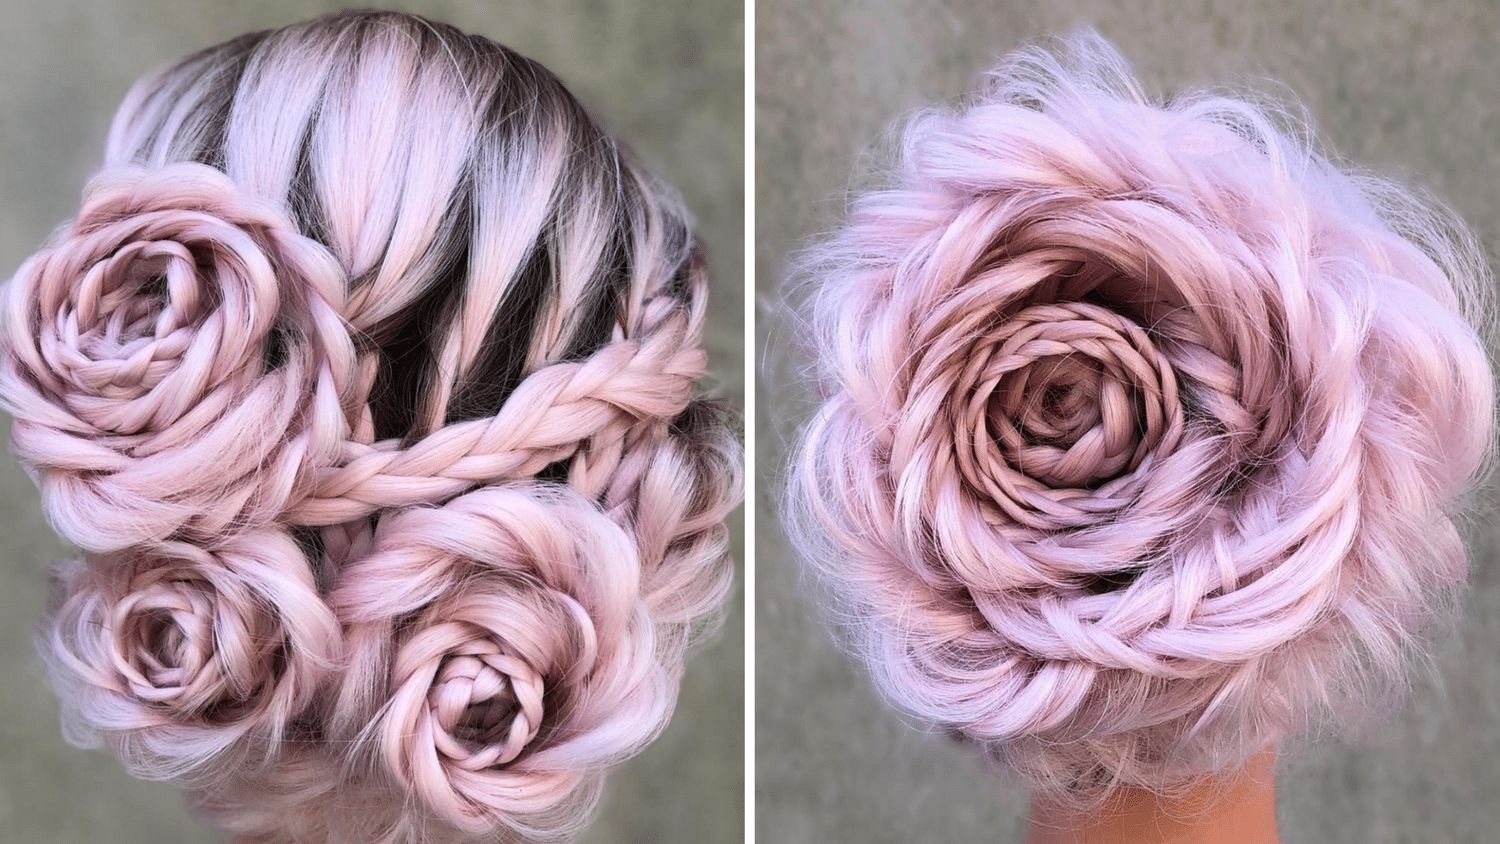 Favorite Rolled Roses Braids Hairstyles In Rose Braid Hairstyles Are An Instagram Hit – Simplemost (View 16 of 20)